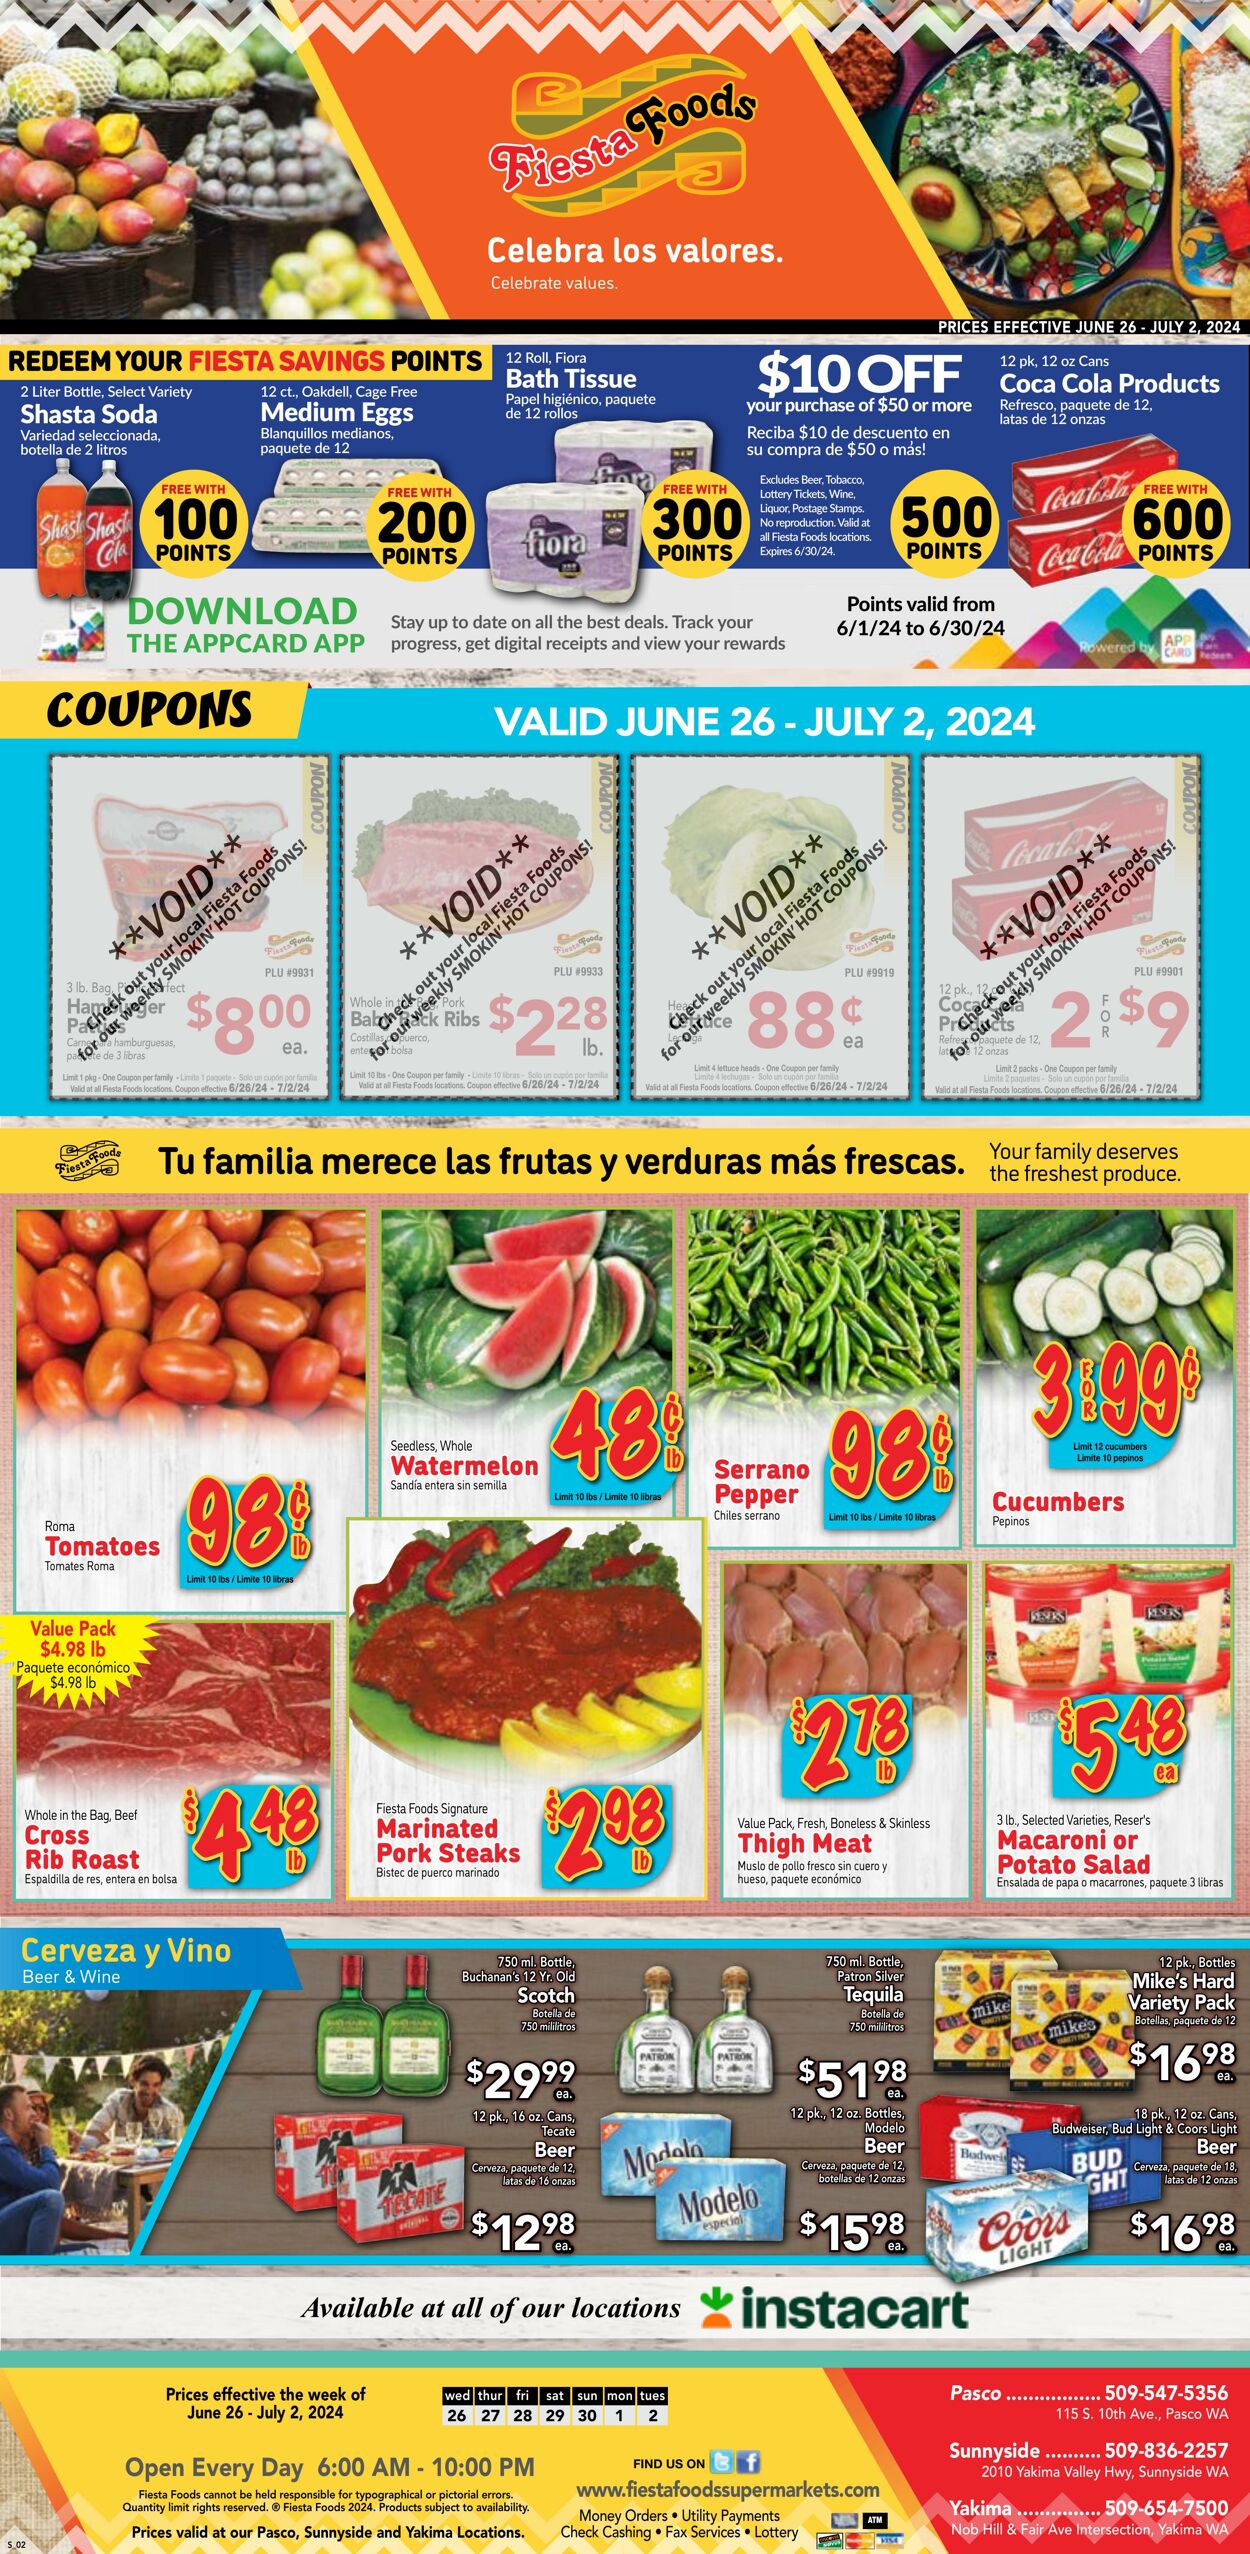 Fiesta Foods Promotional weekly ads